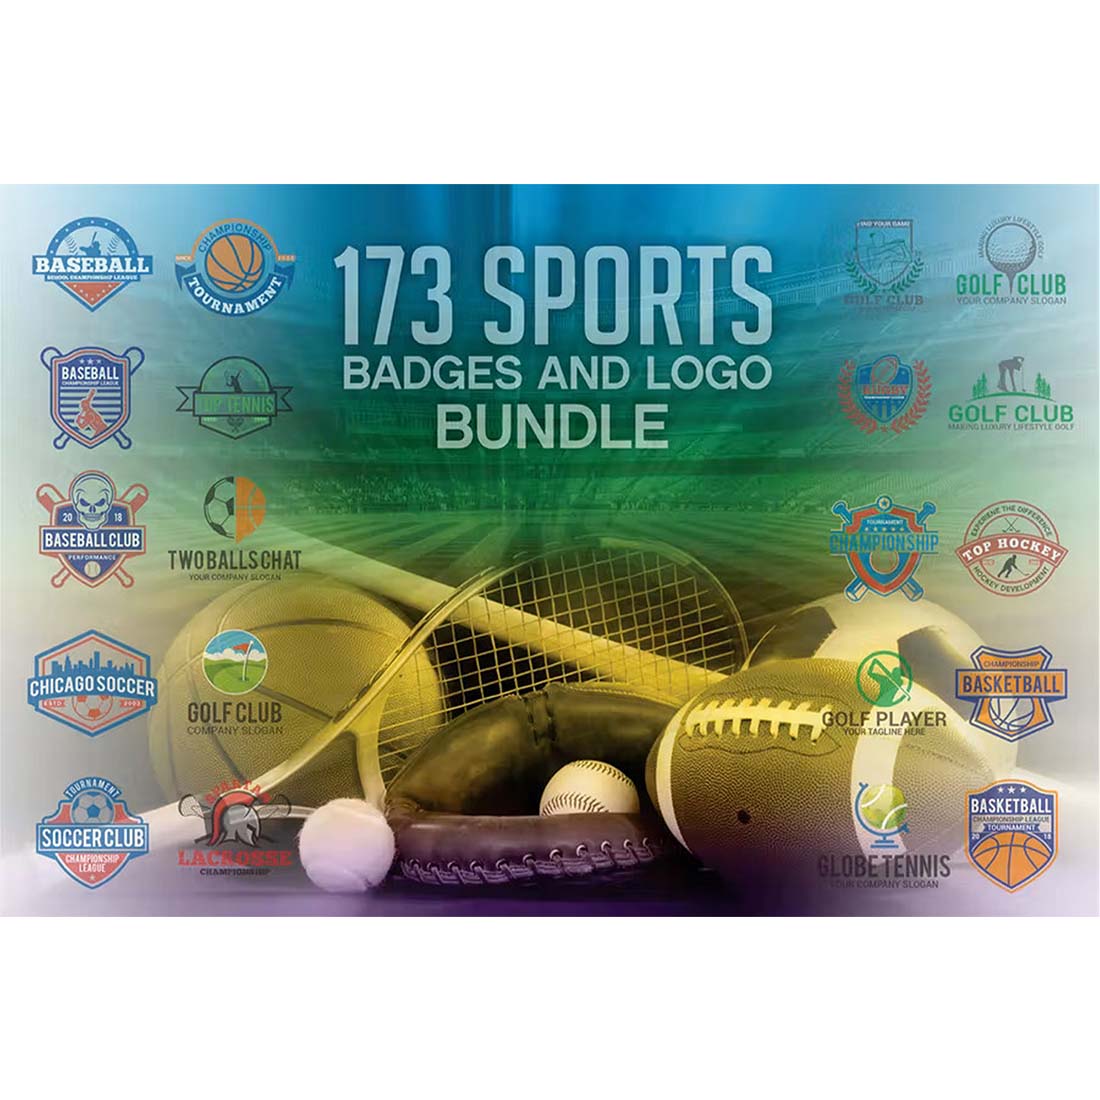 Sports Badges and Logo Bundle cover image.